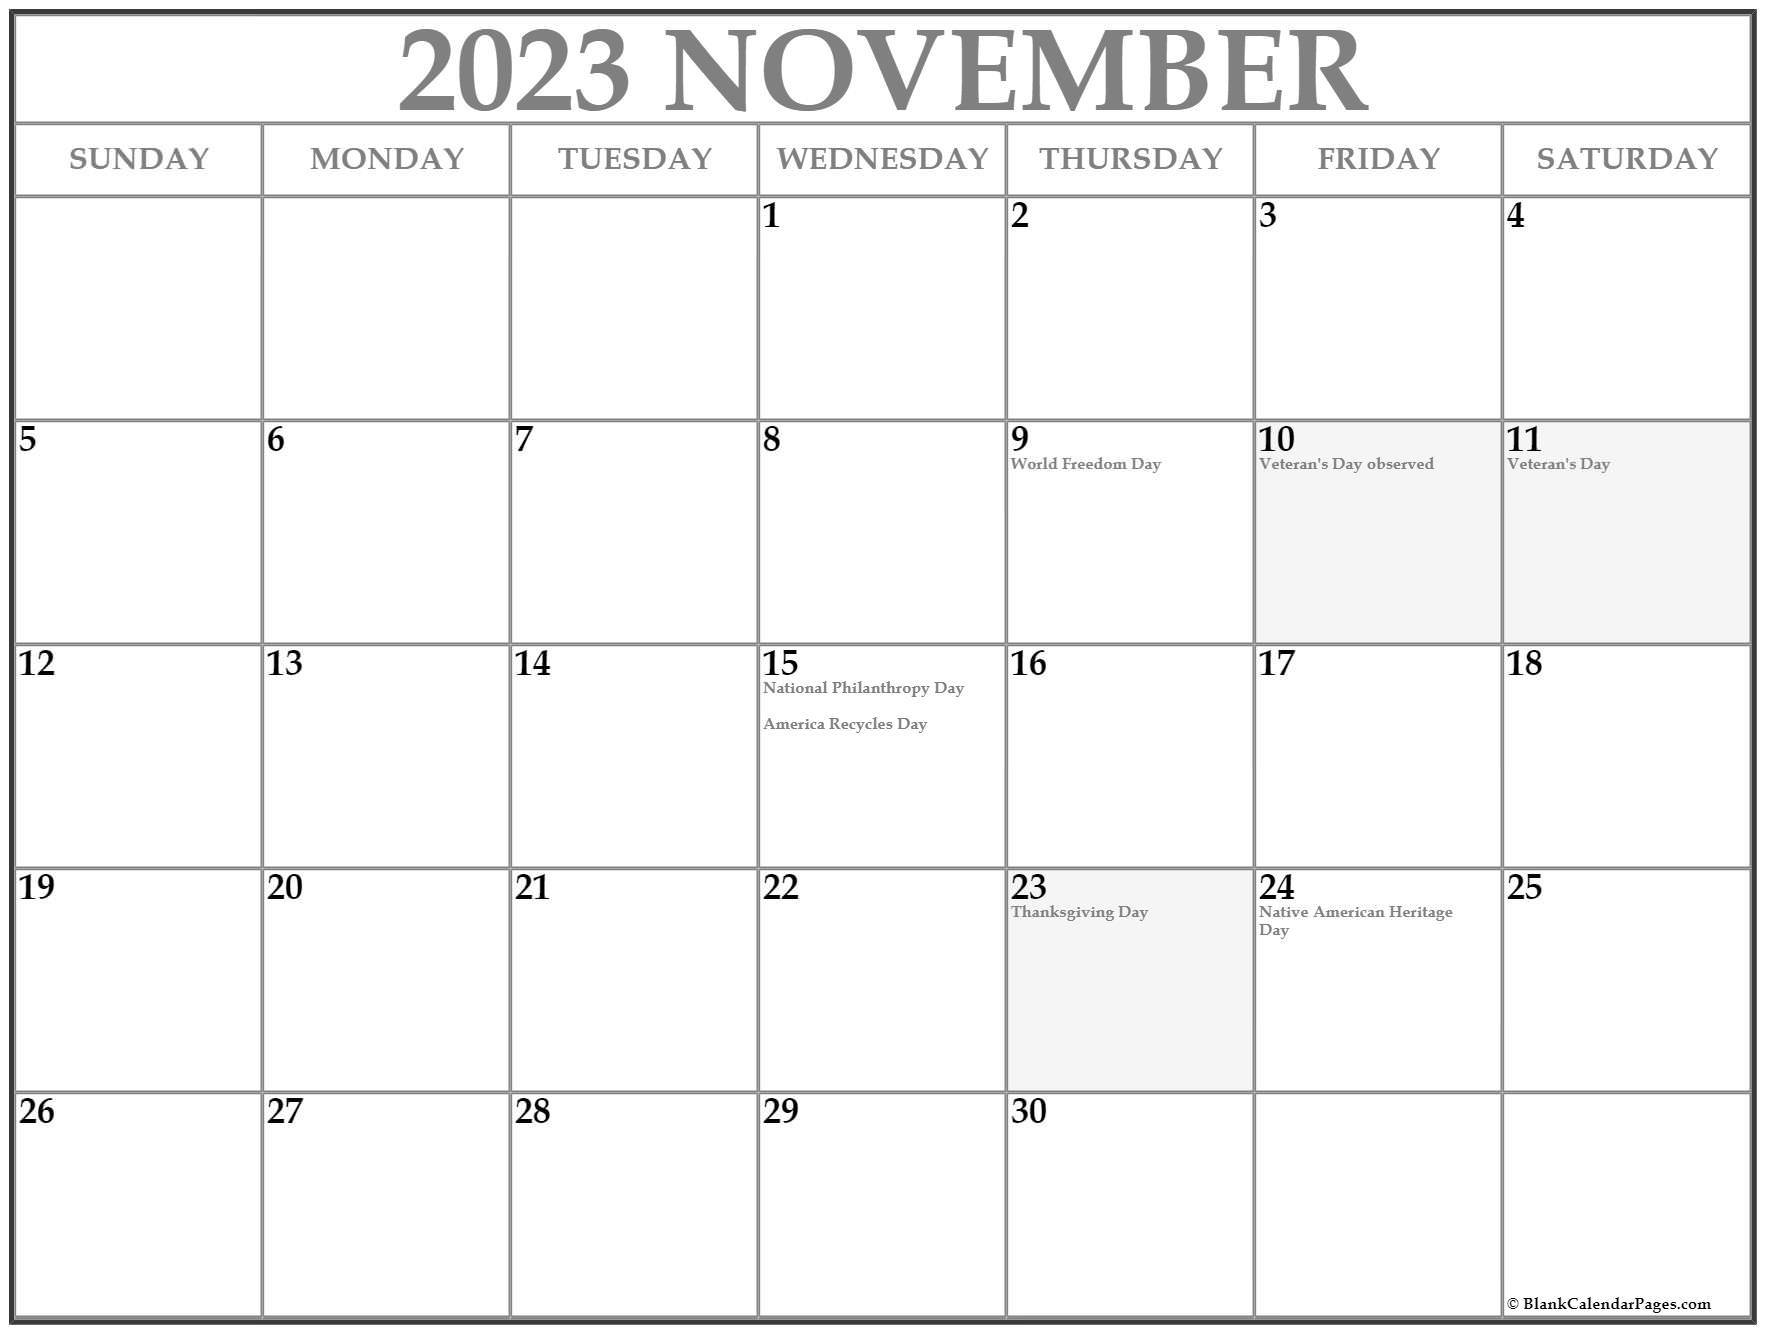 november-2023-printable-calendar-calendar-2023-with-federal-holidays